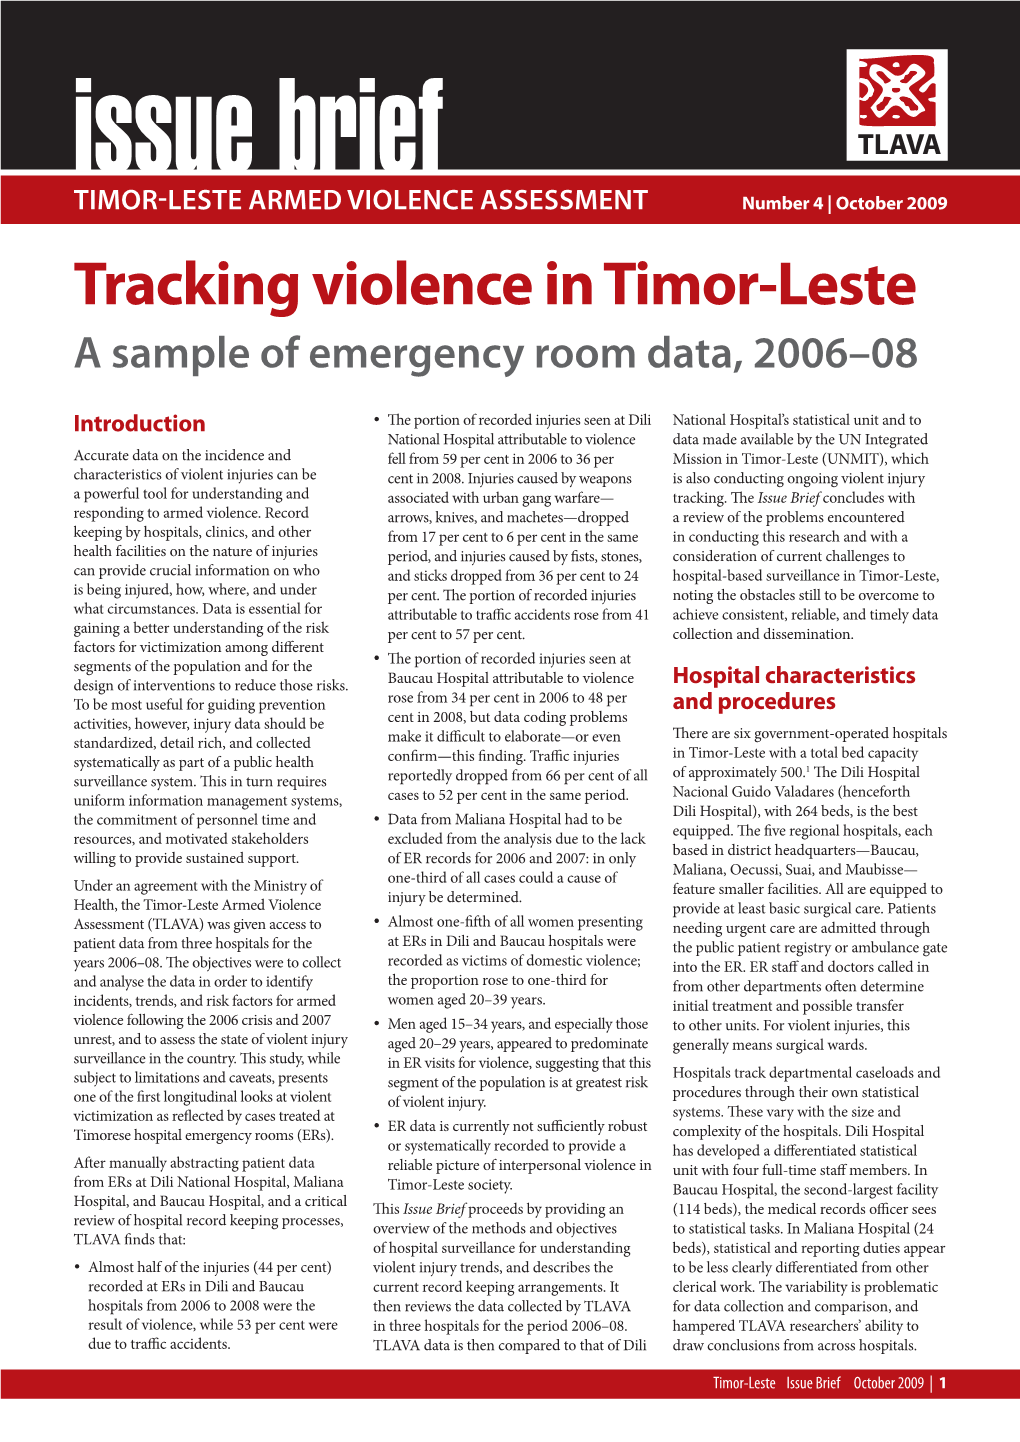 Tracking Violence in Timor-Leste a Sample of Emergency Room Data, 2006–08